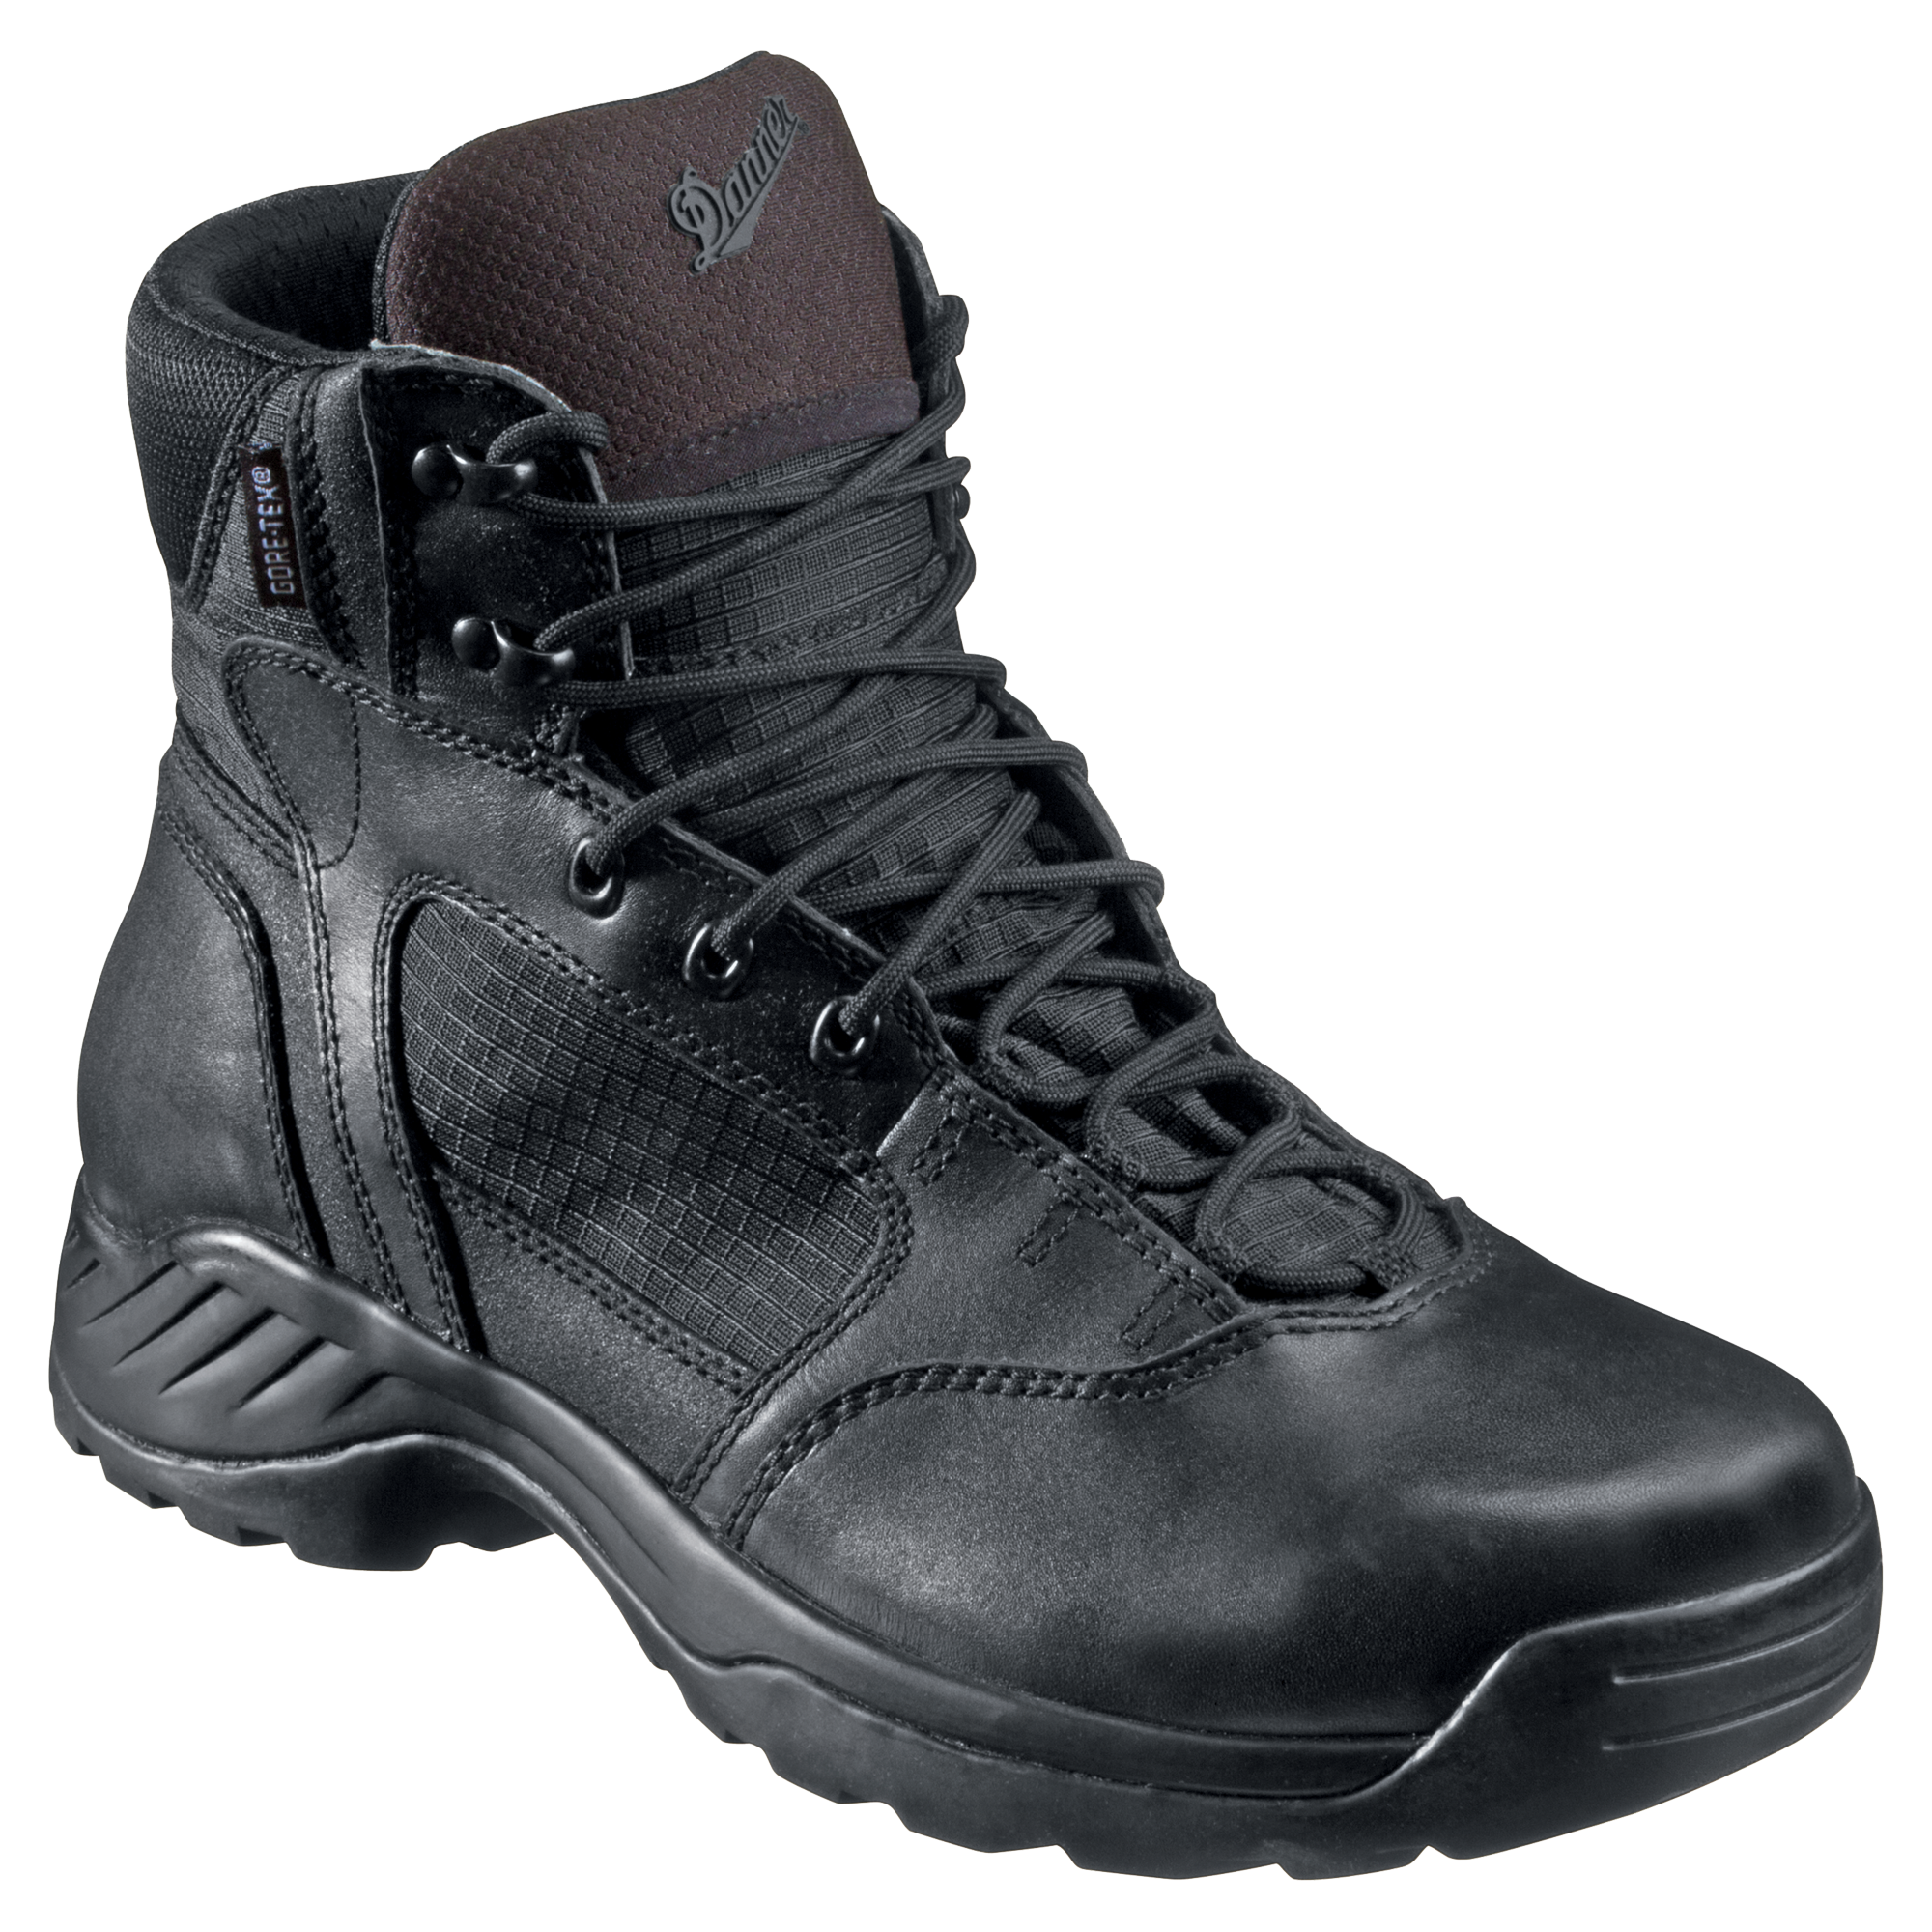 Danner Kinetic Side-Zip GORE-TEX Work Boots for Men - Black - 11.5M